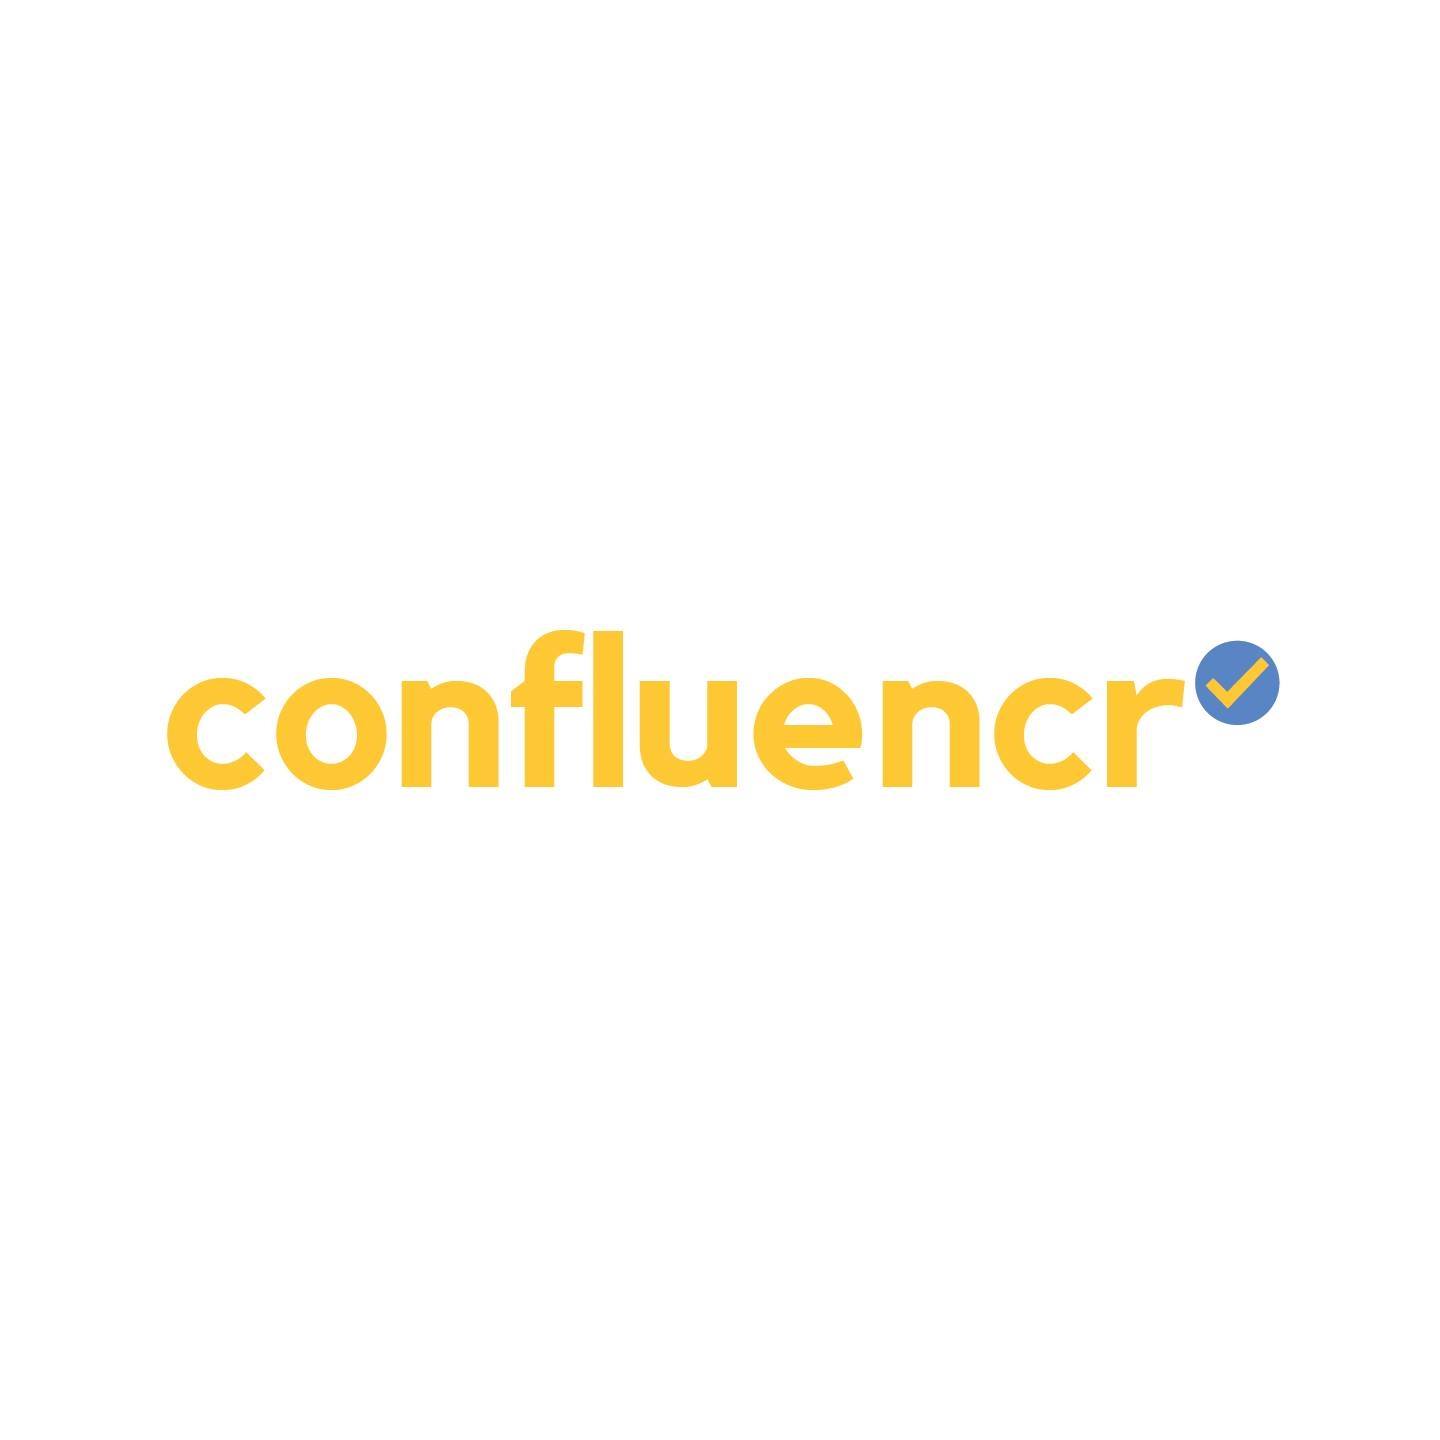 Confluencr - Global Influencer Marketing Agency